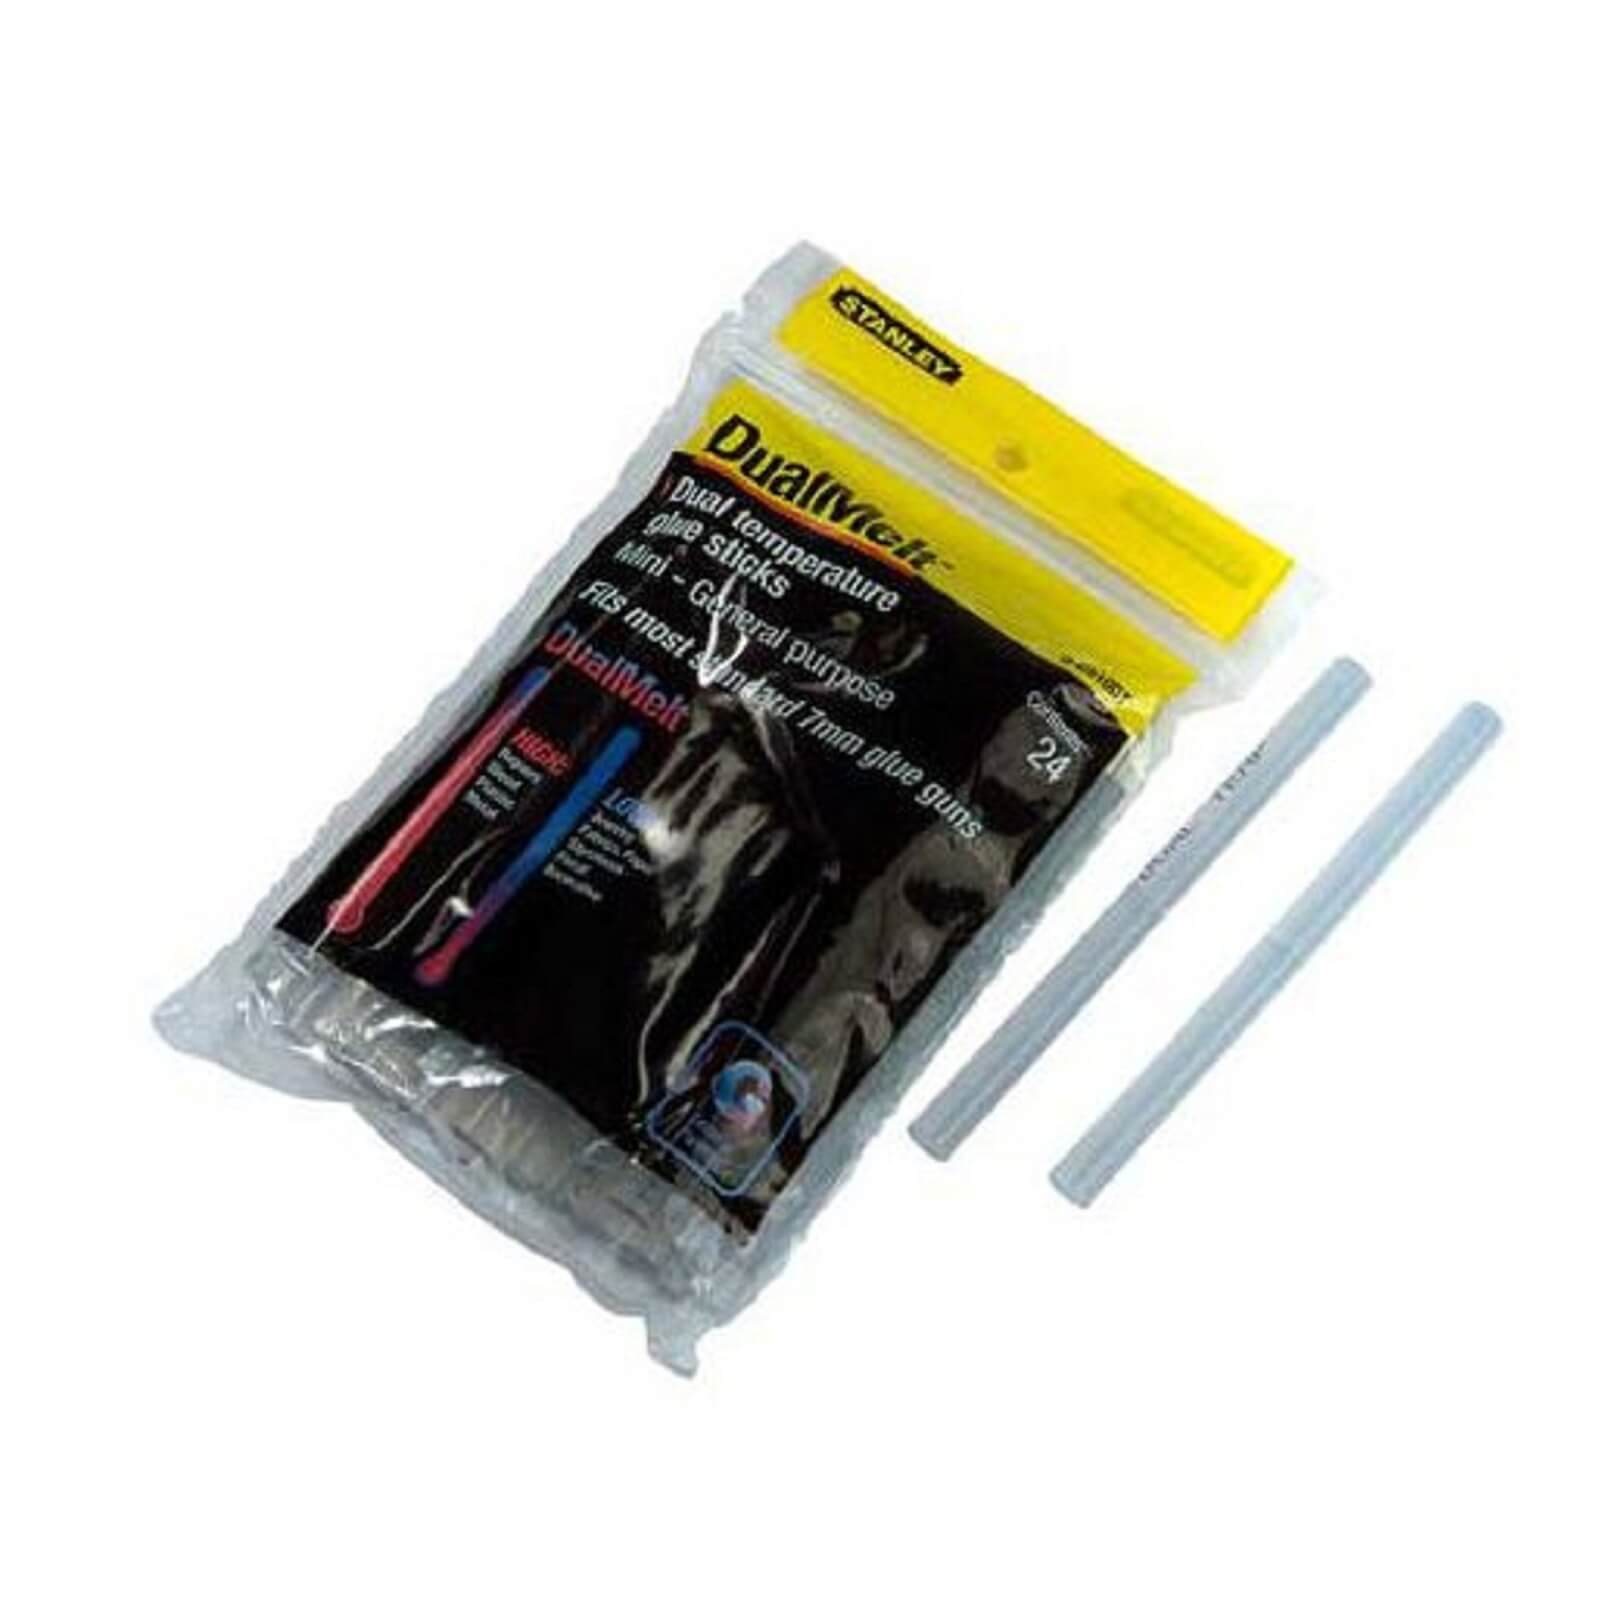 STANLEY DualMelt 7x101 mm Glue Sticks Pack of 24 (1-GS10DT)